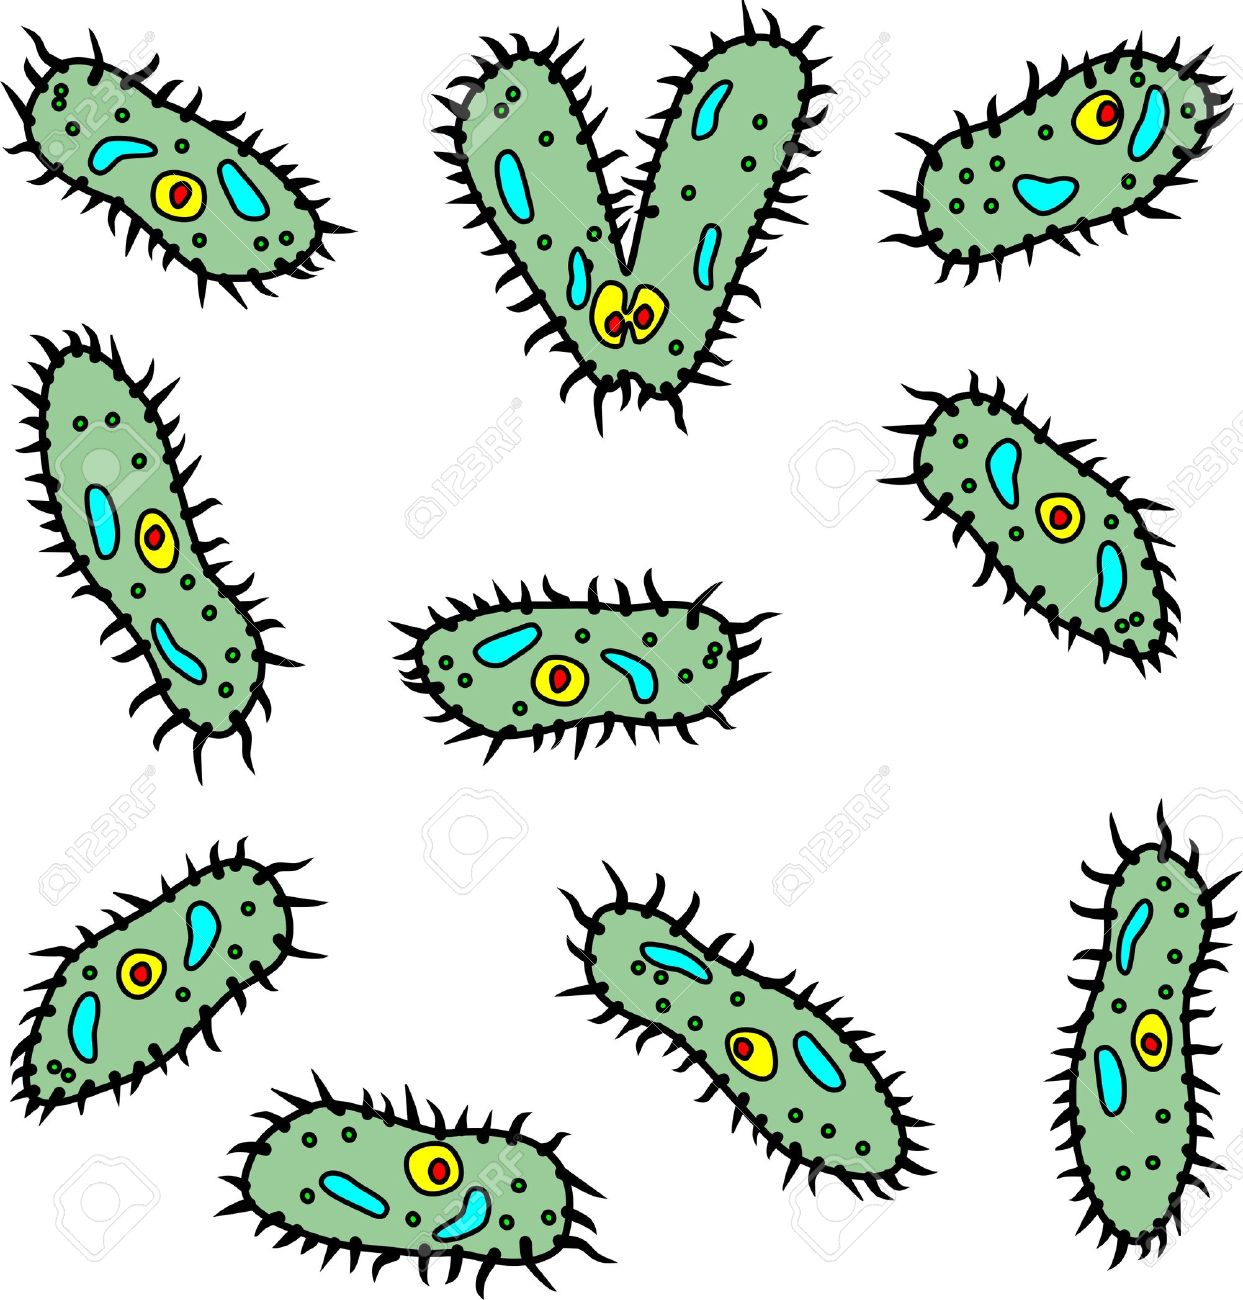 free clipart germs cartoon - photo #48